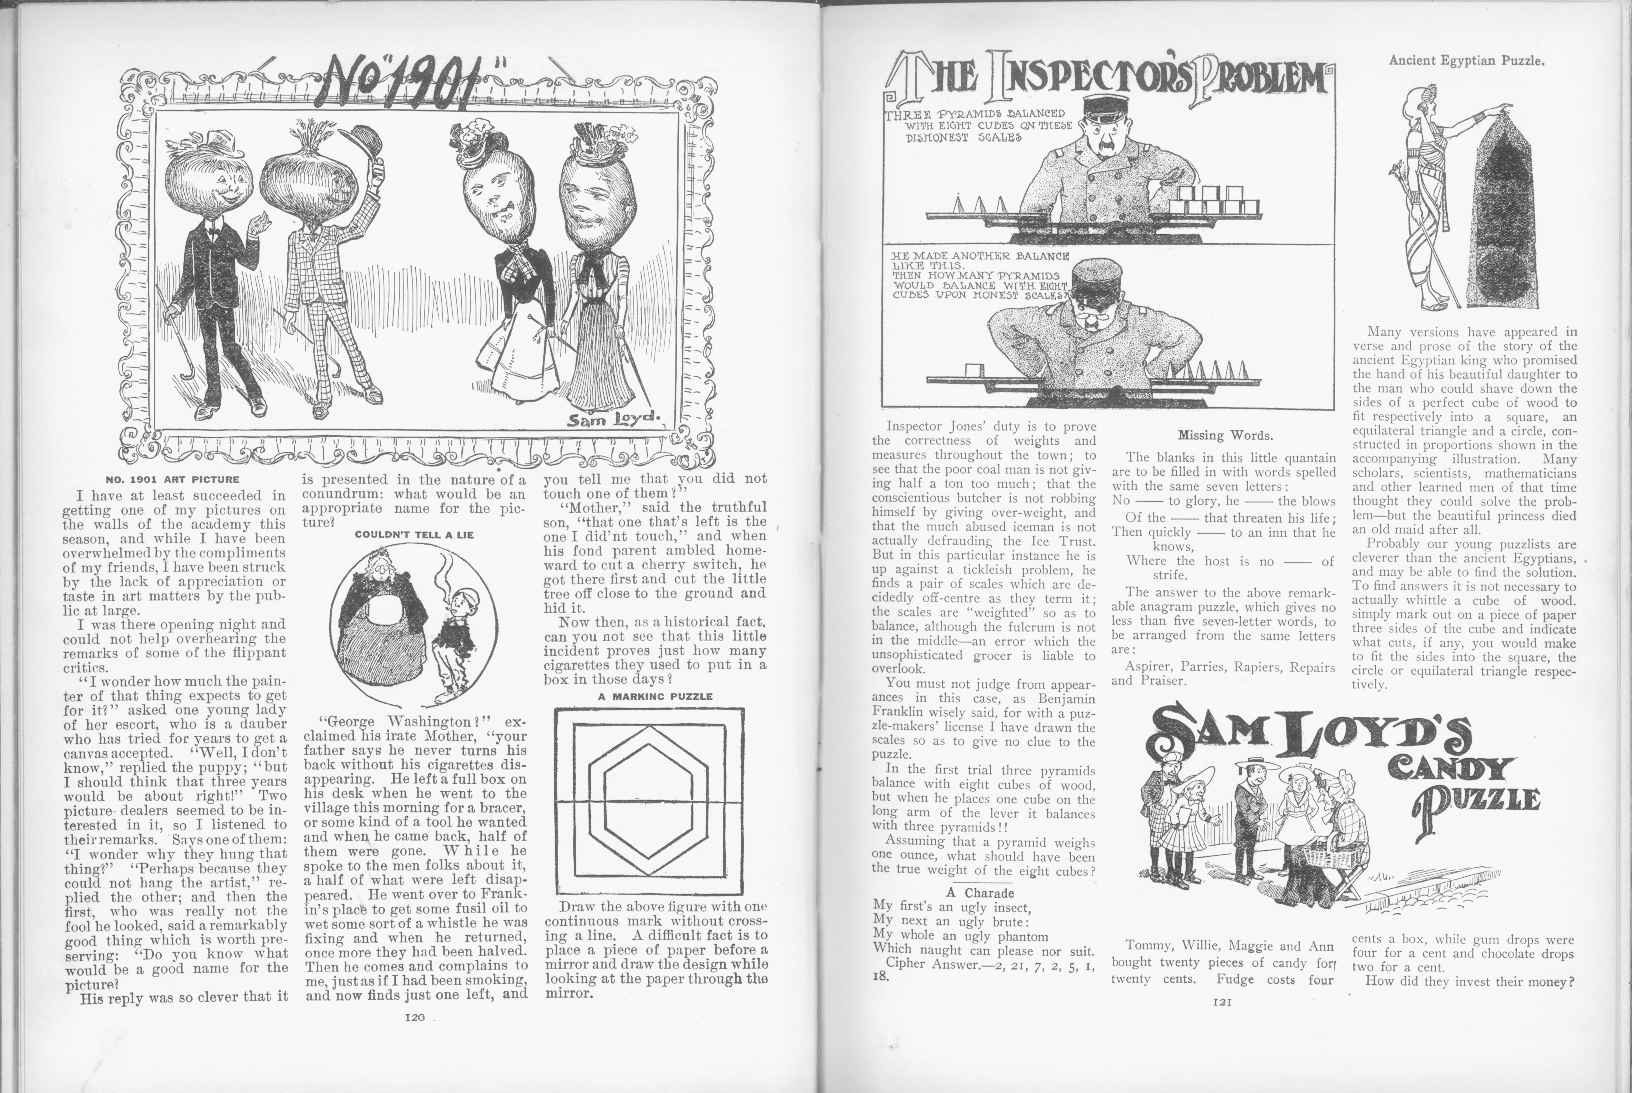 Sam Loyd - Cyclopedia of Puzzles - page 120-121